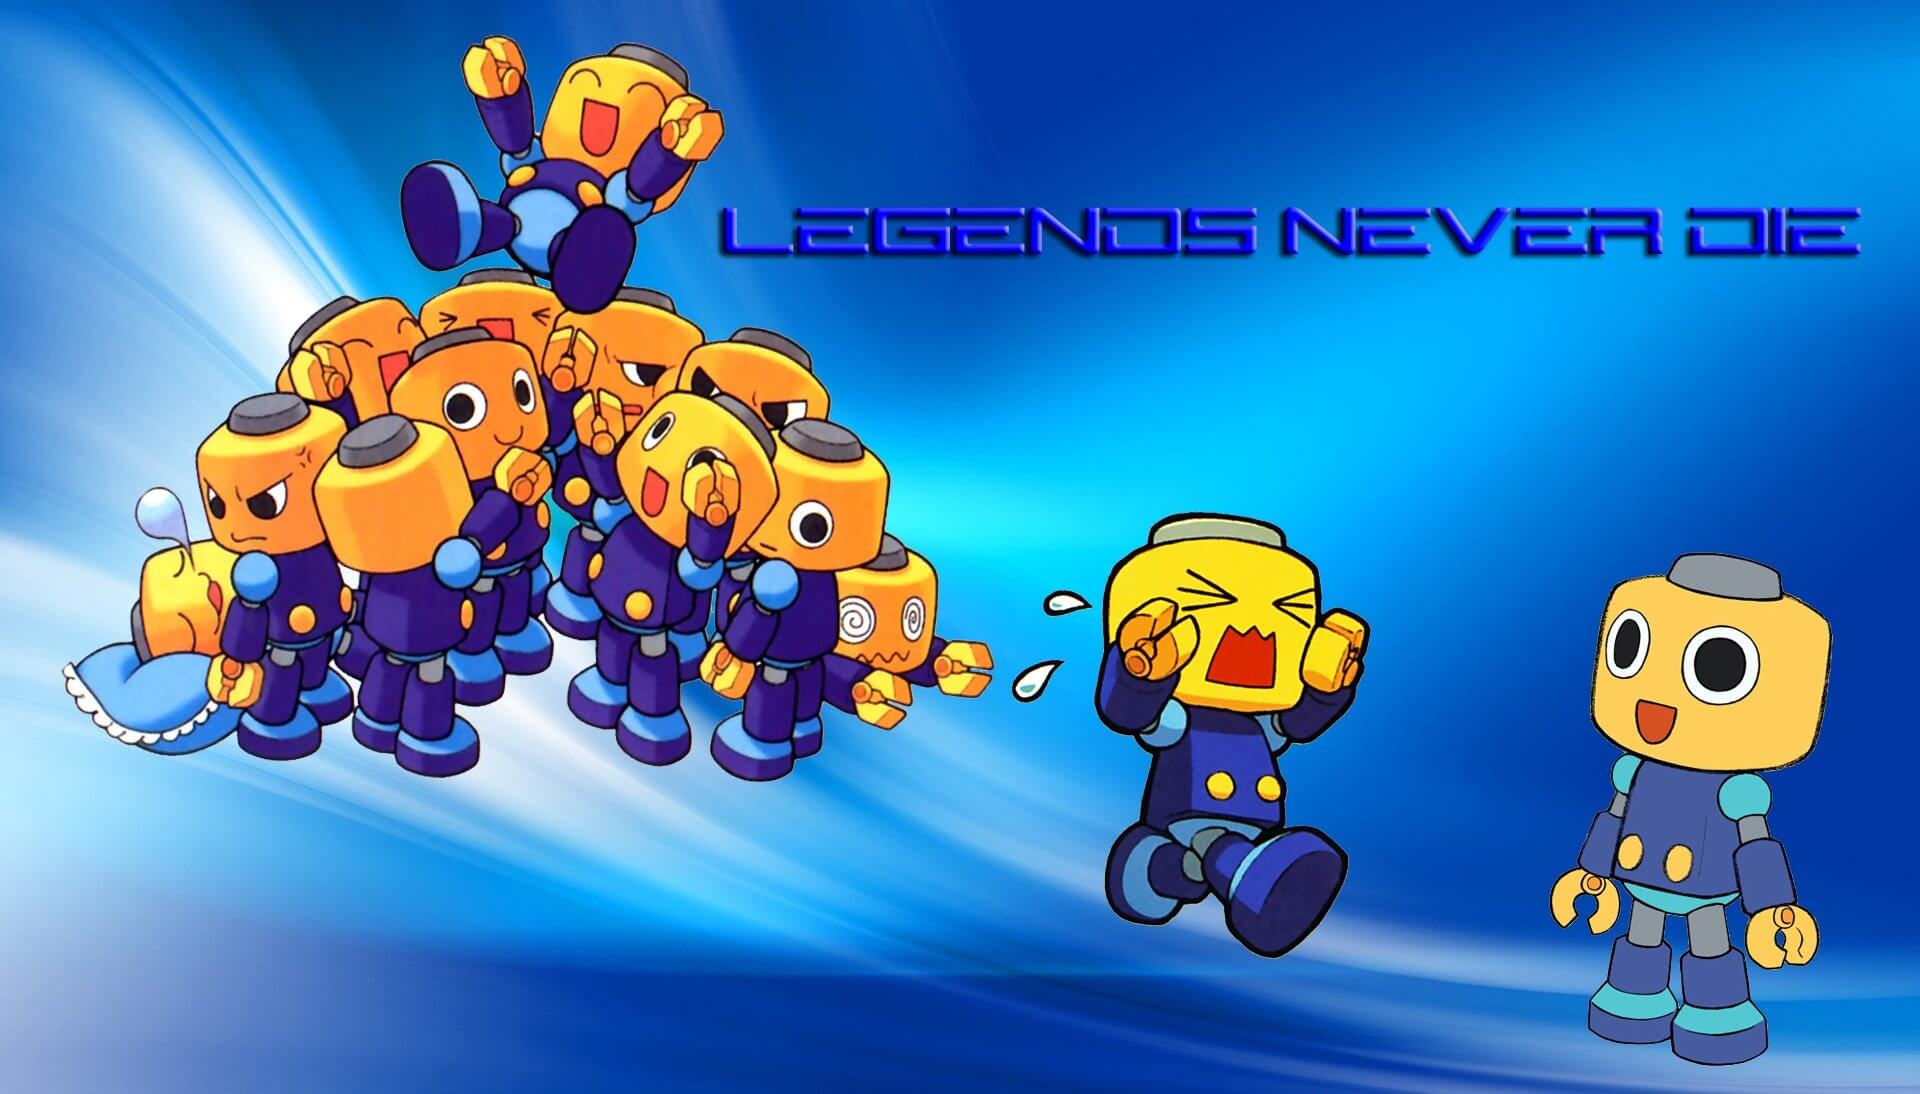 Megaman Legends Never Die Hd Wallpaper Gamephd